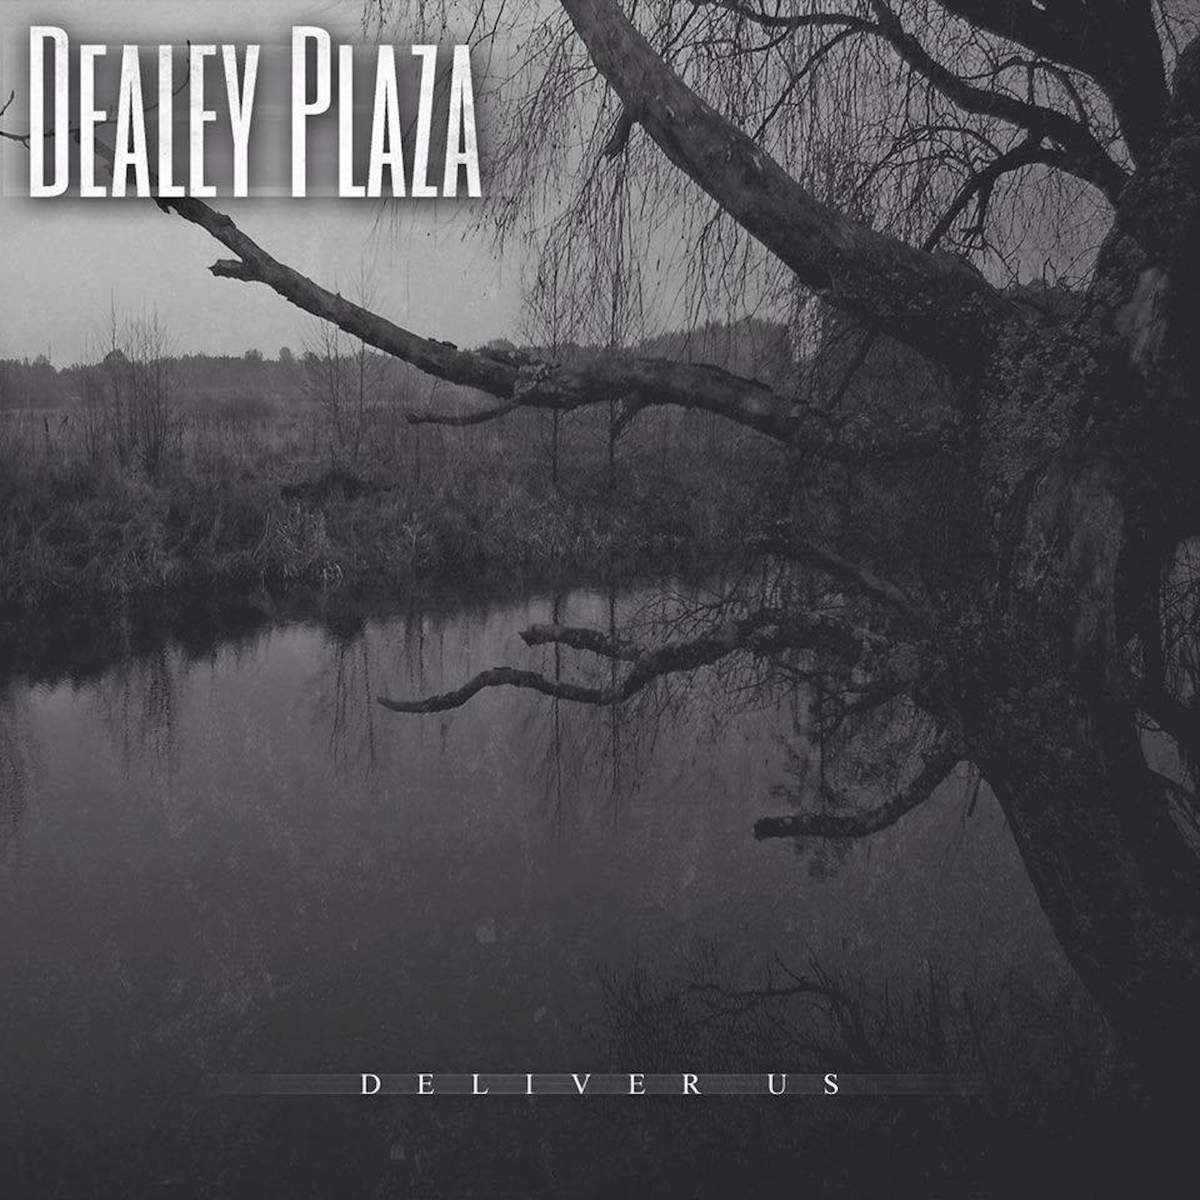 Dealey Plaza - Deliver Us (2015) Album Info